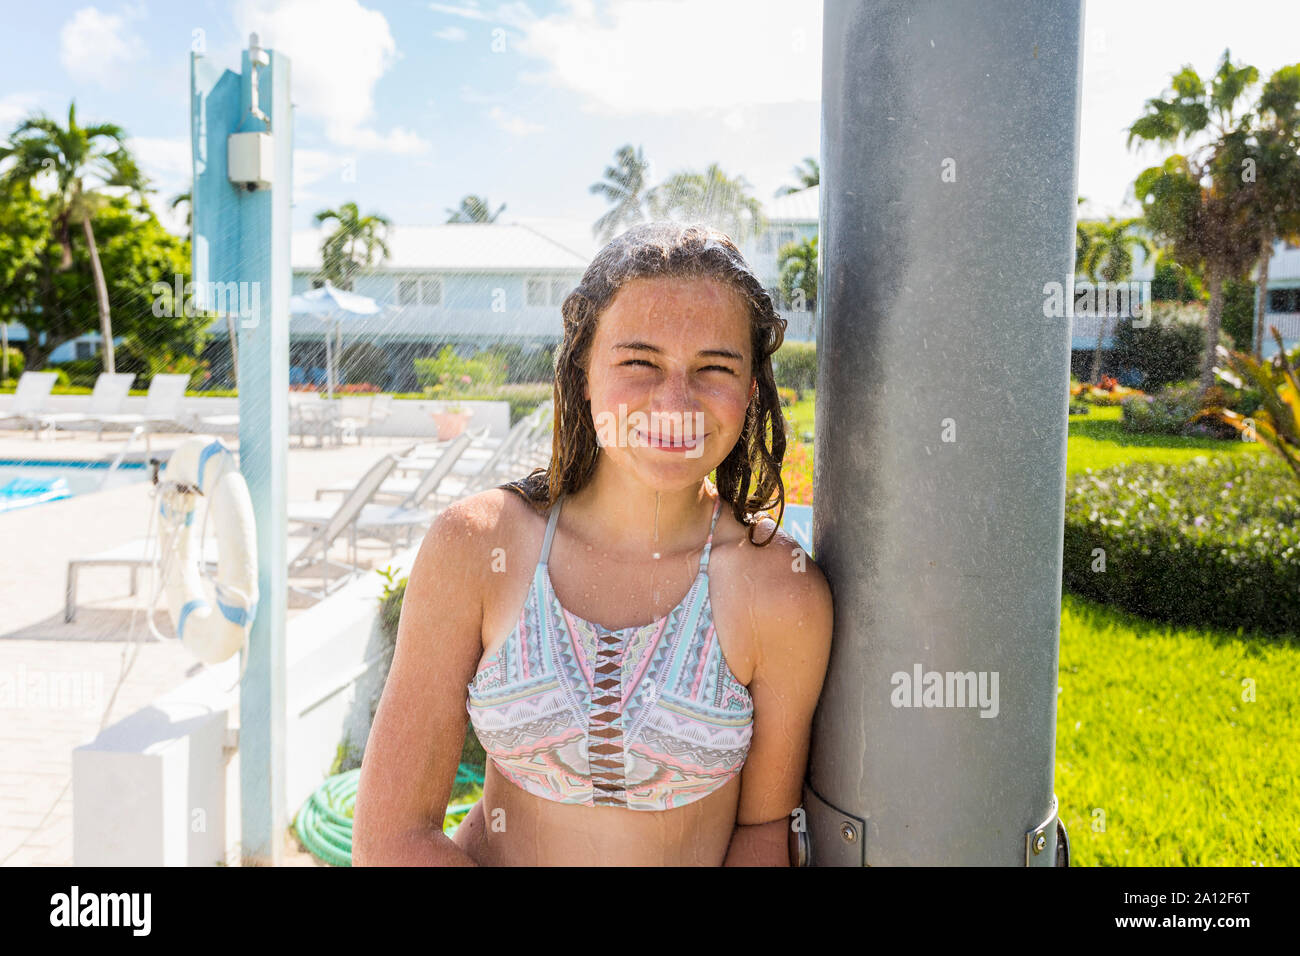 13 year old girl wearing bikini smiling at camera Stock Photo ...